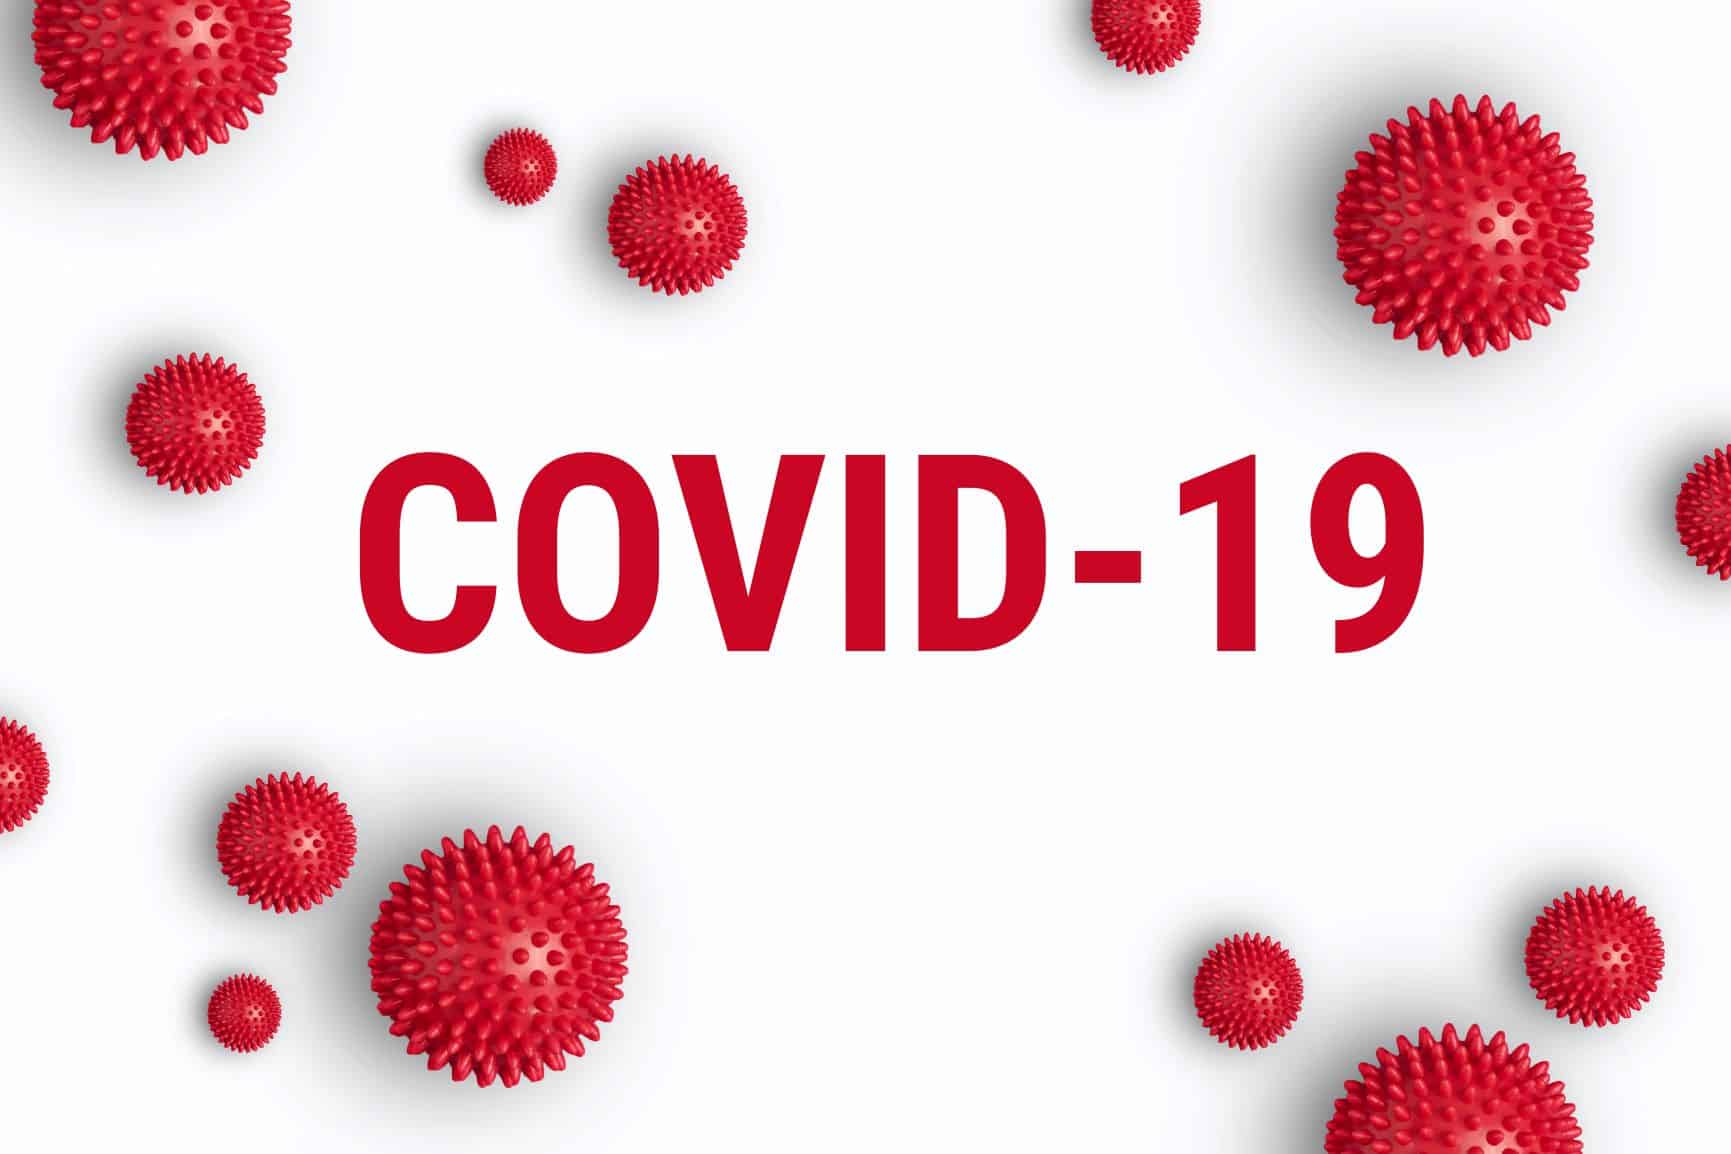 Safety precautions to reduce the spread of Coronavirus